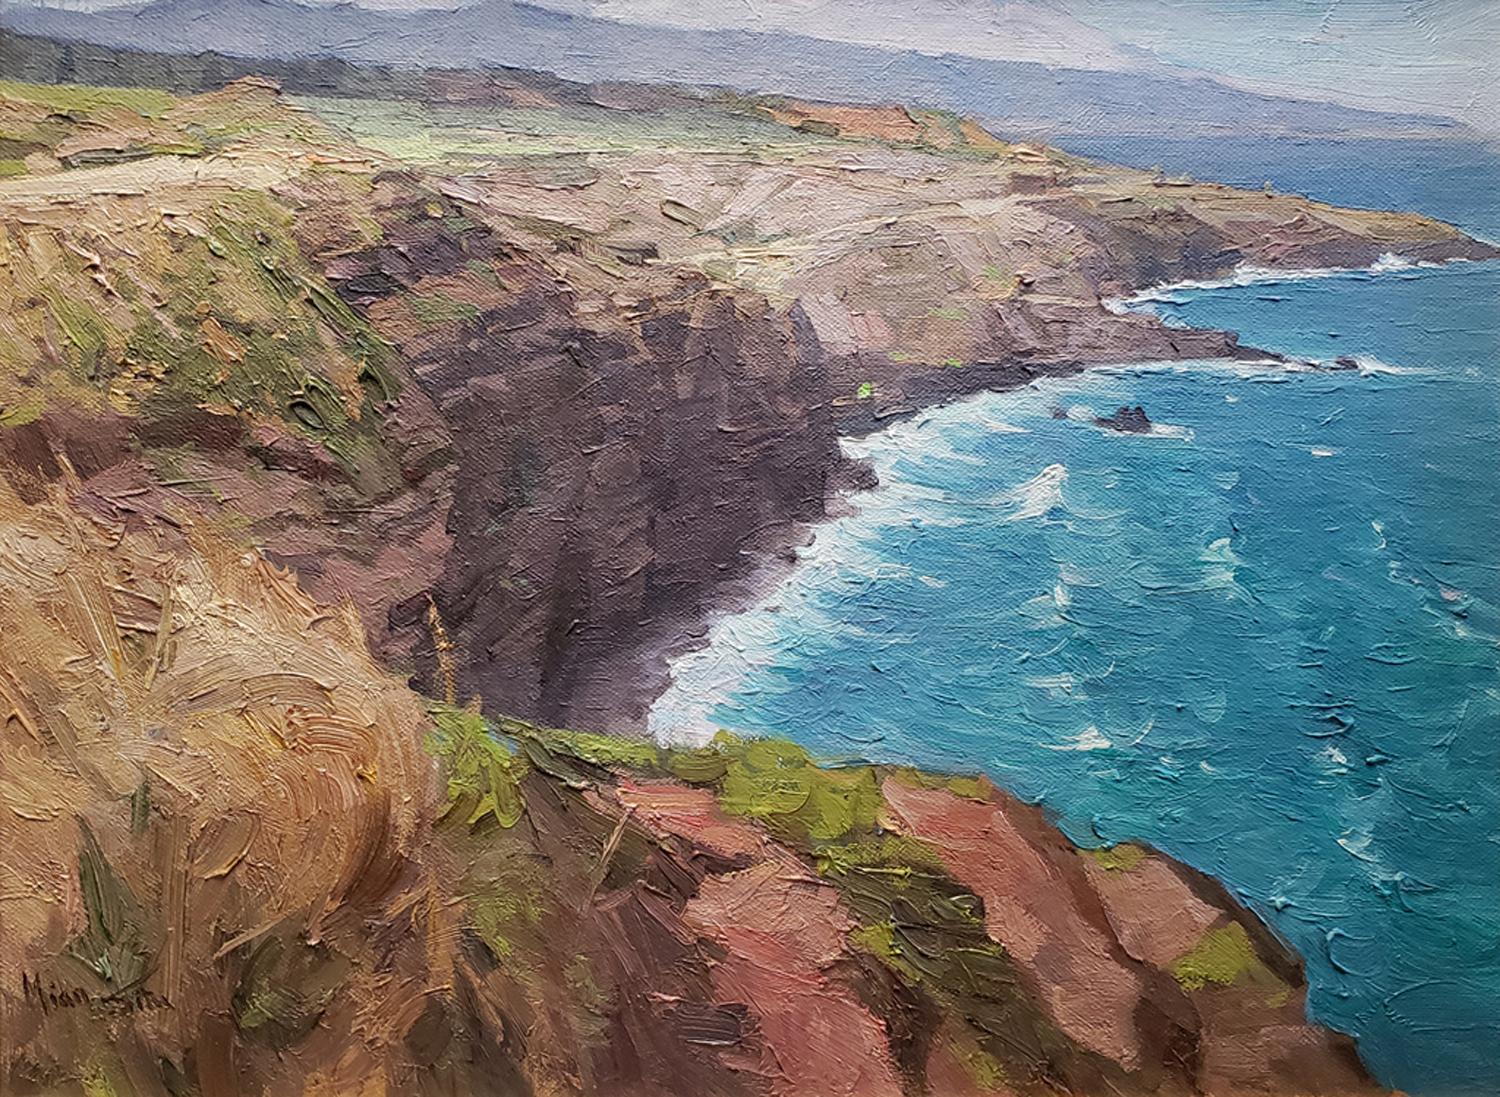 Maui Coastline - Painting by Mian Situ